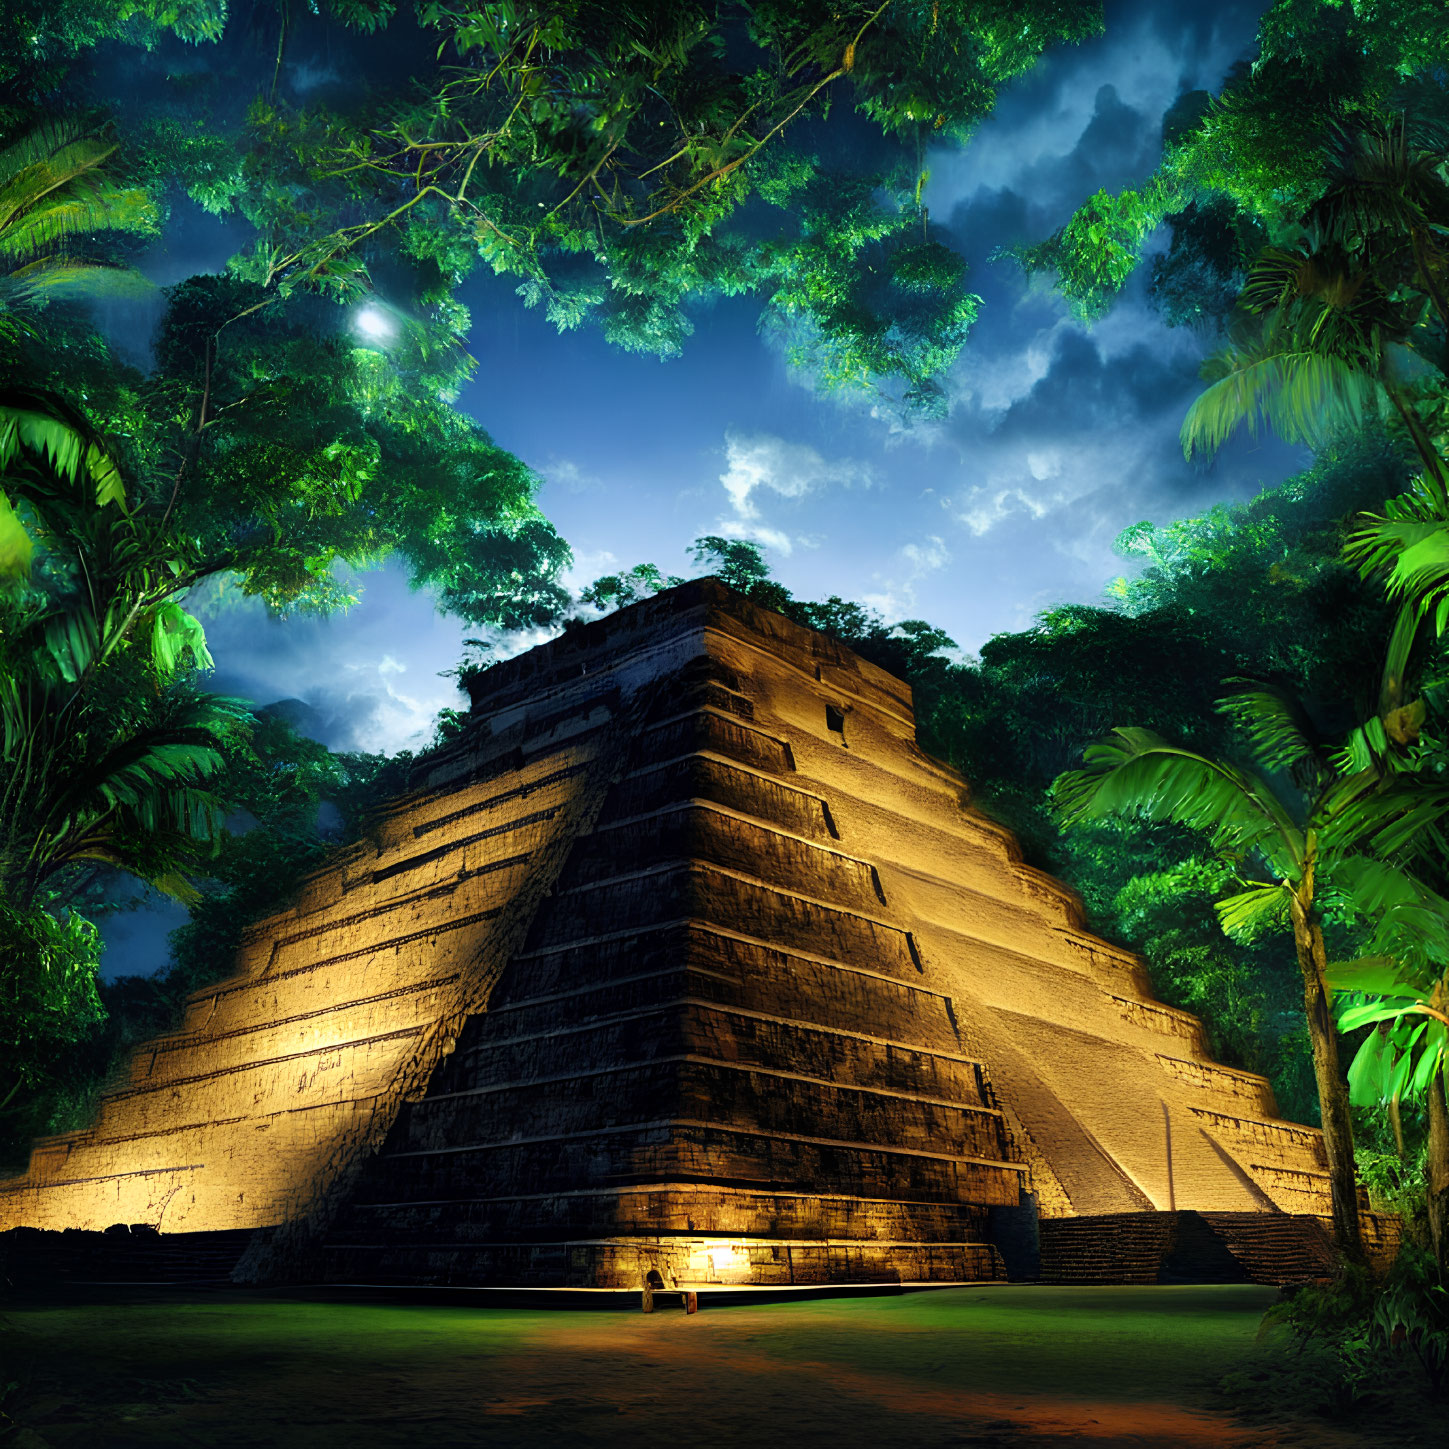 Ancient Pyramid Illuminated in Nighttime Setting